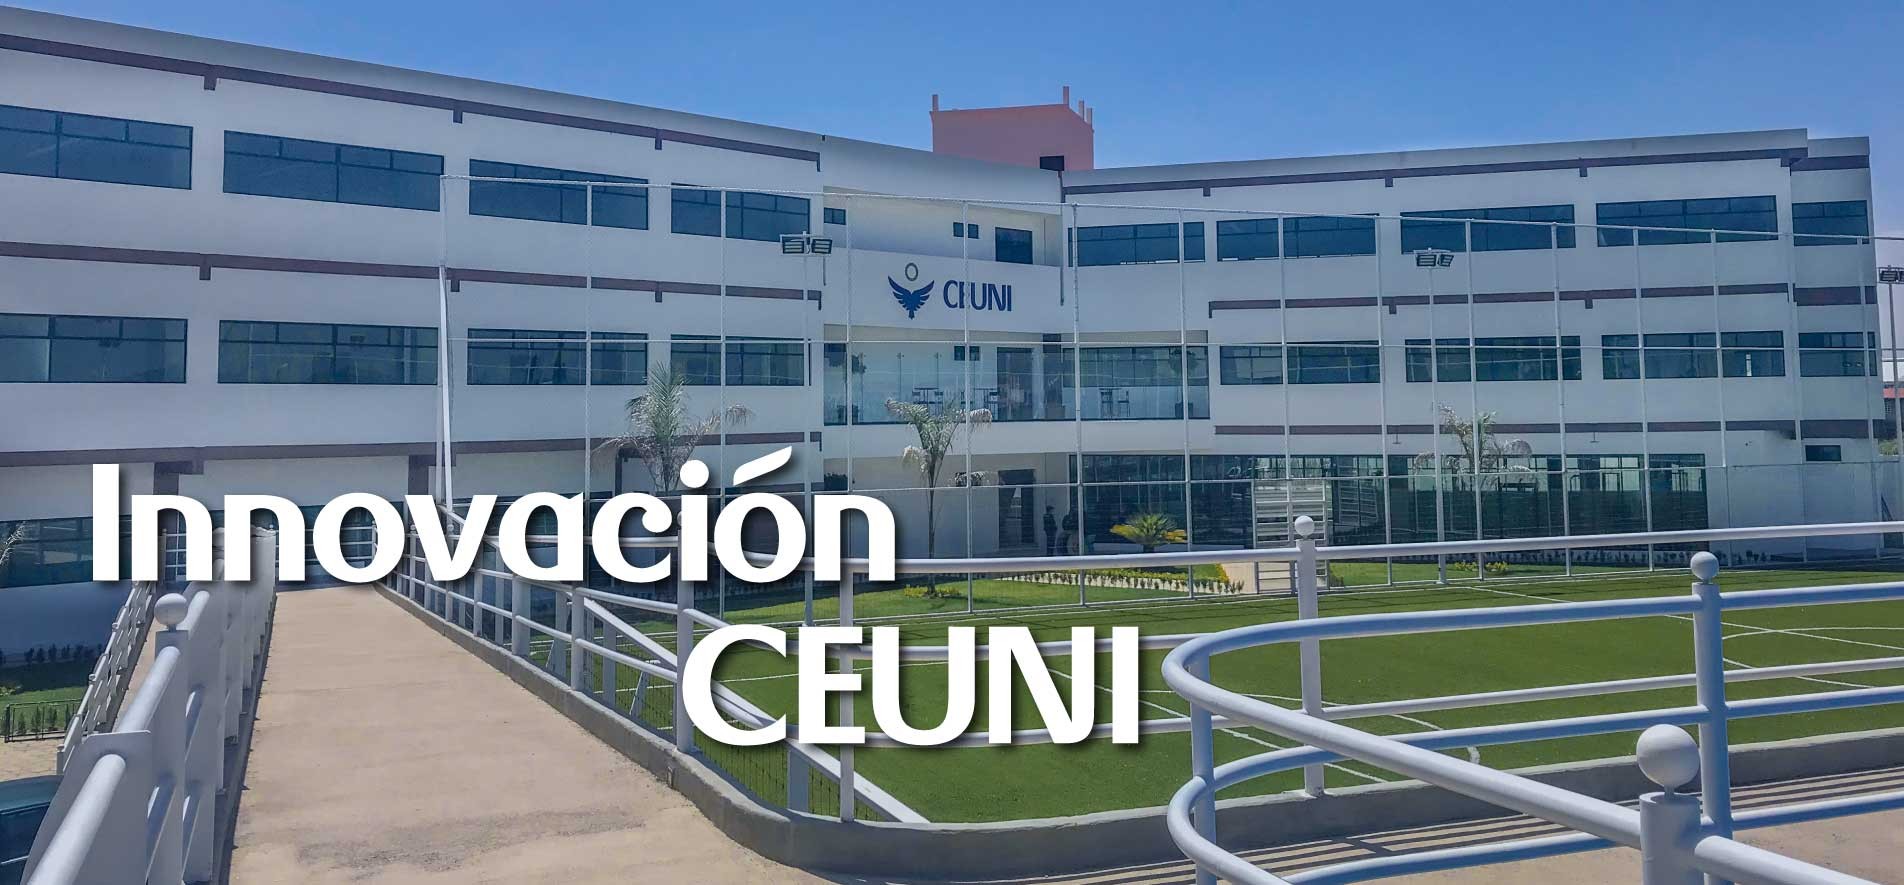 CEUNI_innovacion_l